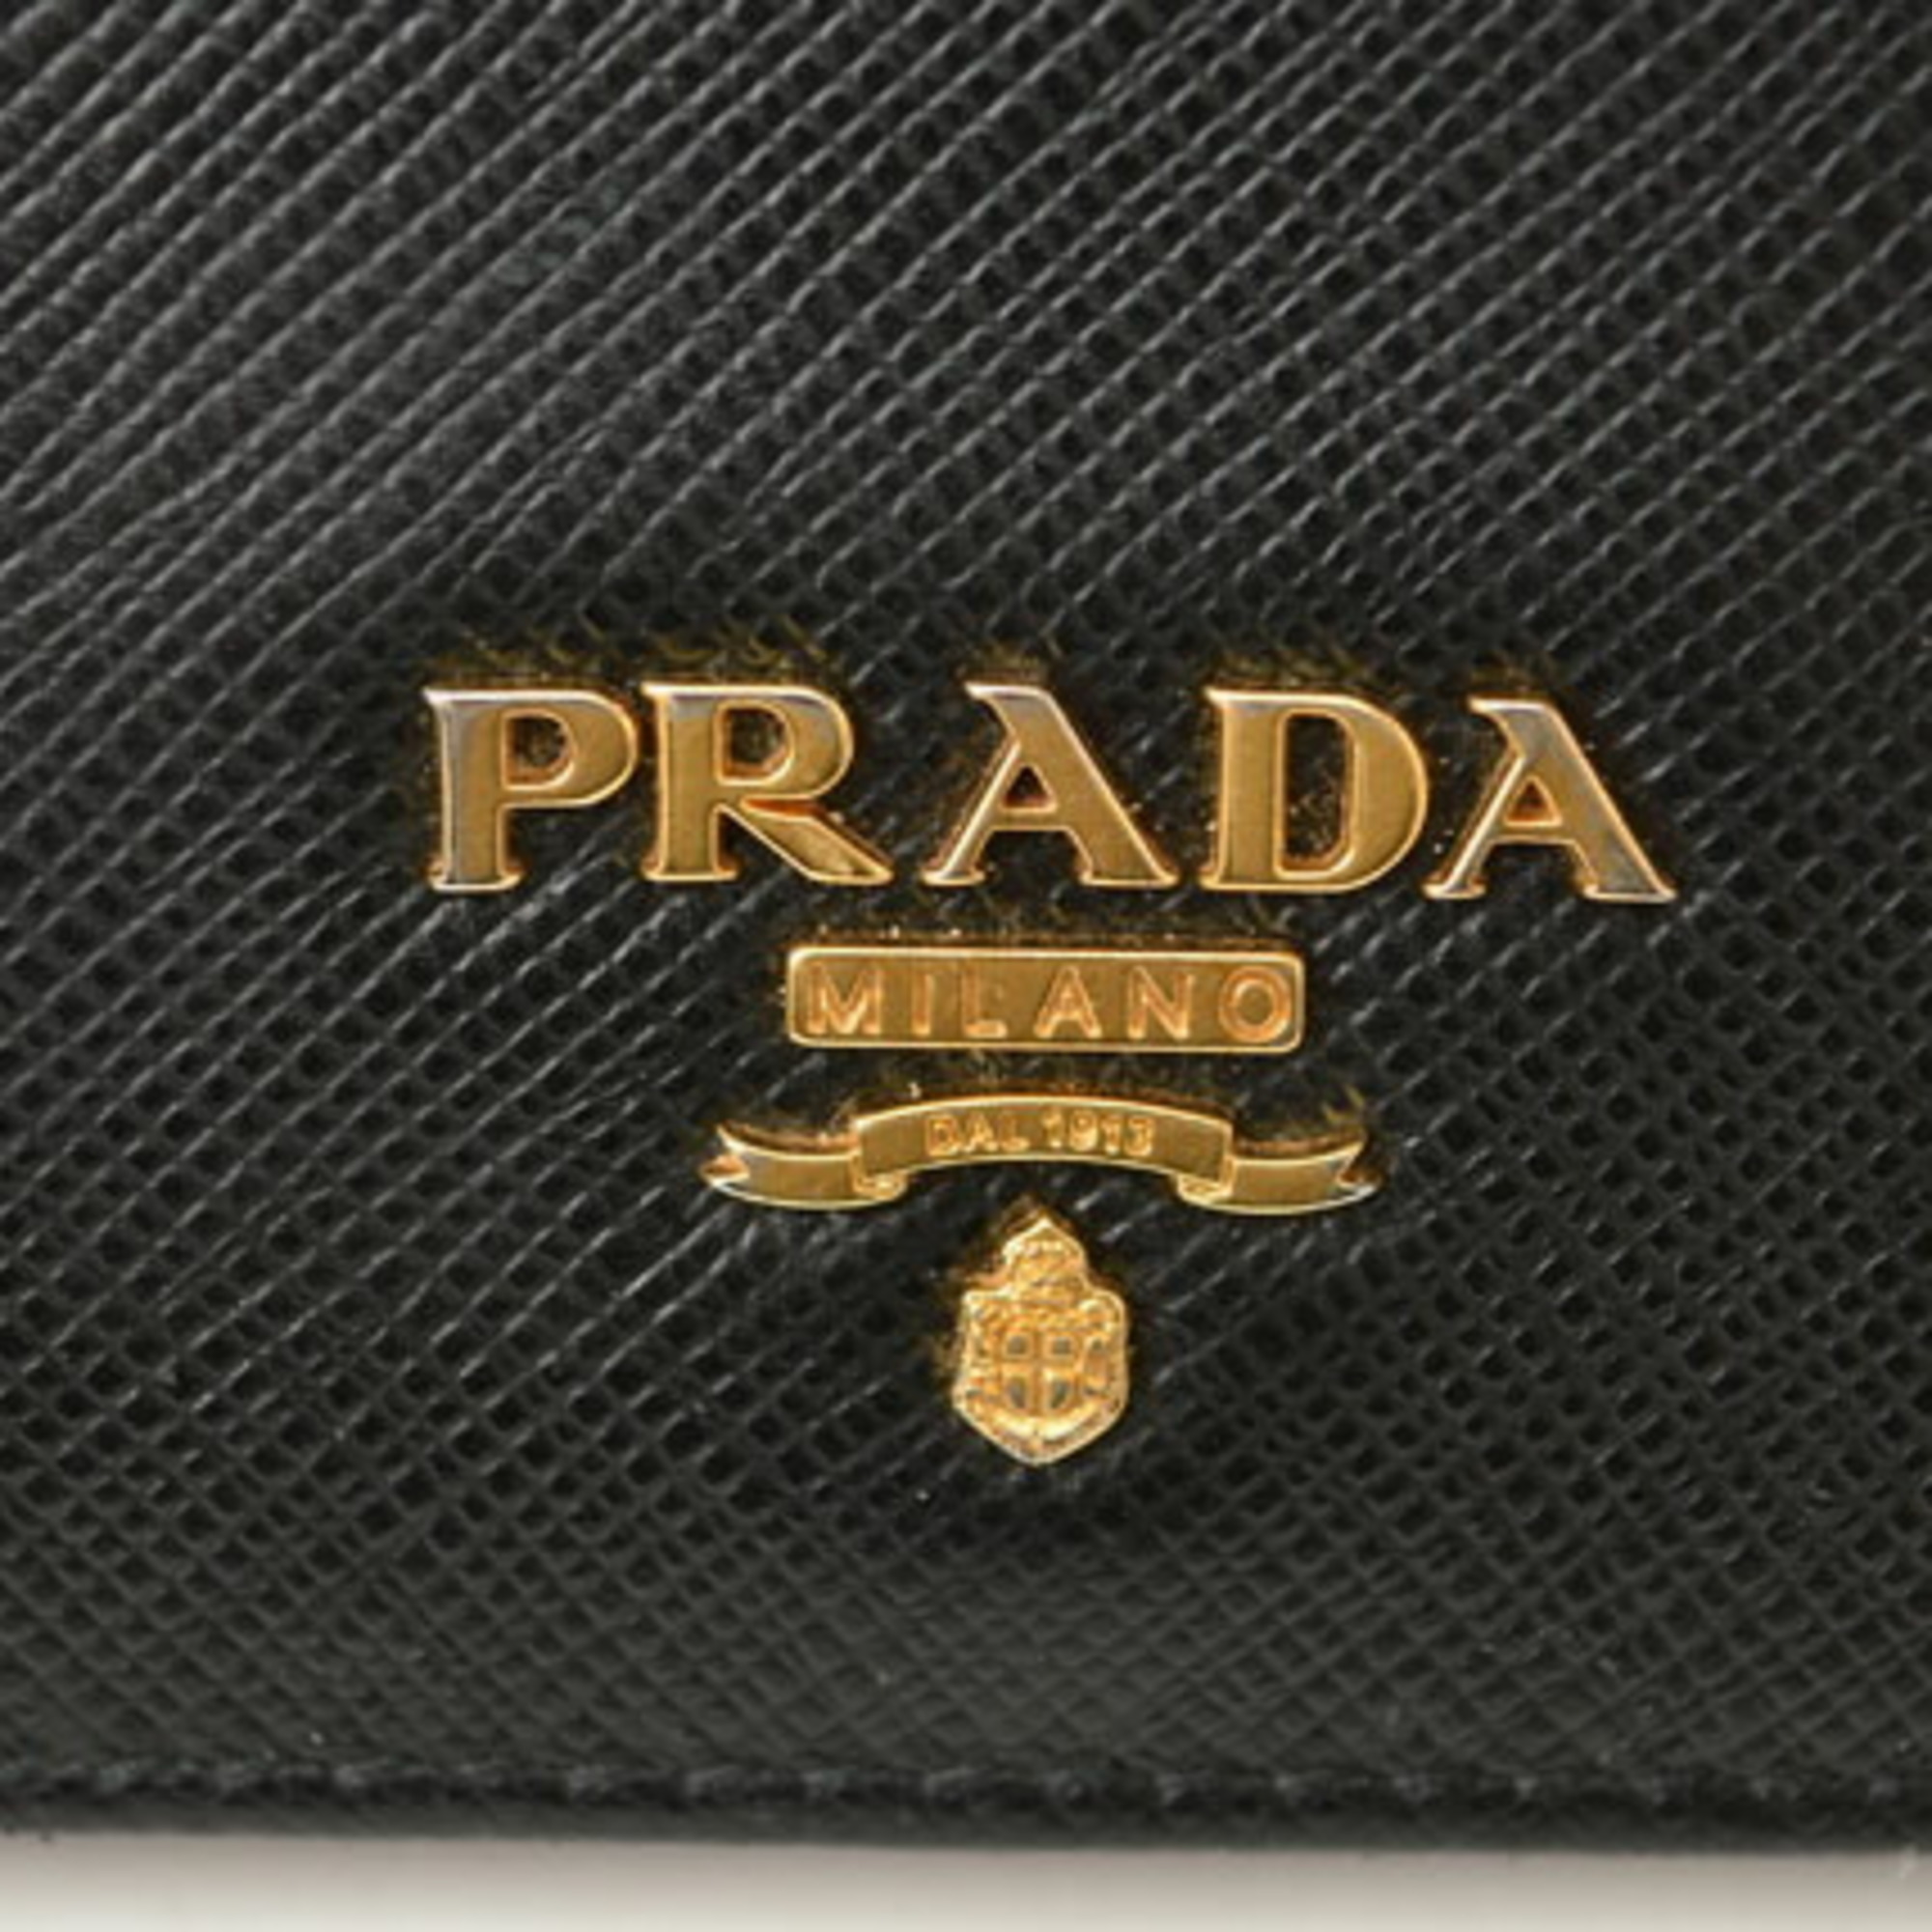 Prada wallet PRADA folding 1MV204 SAFFIANO NERO black